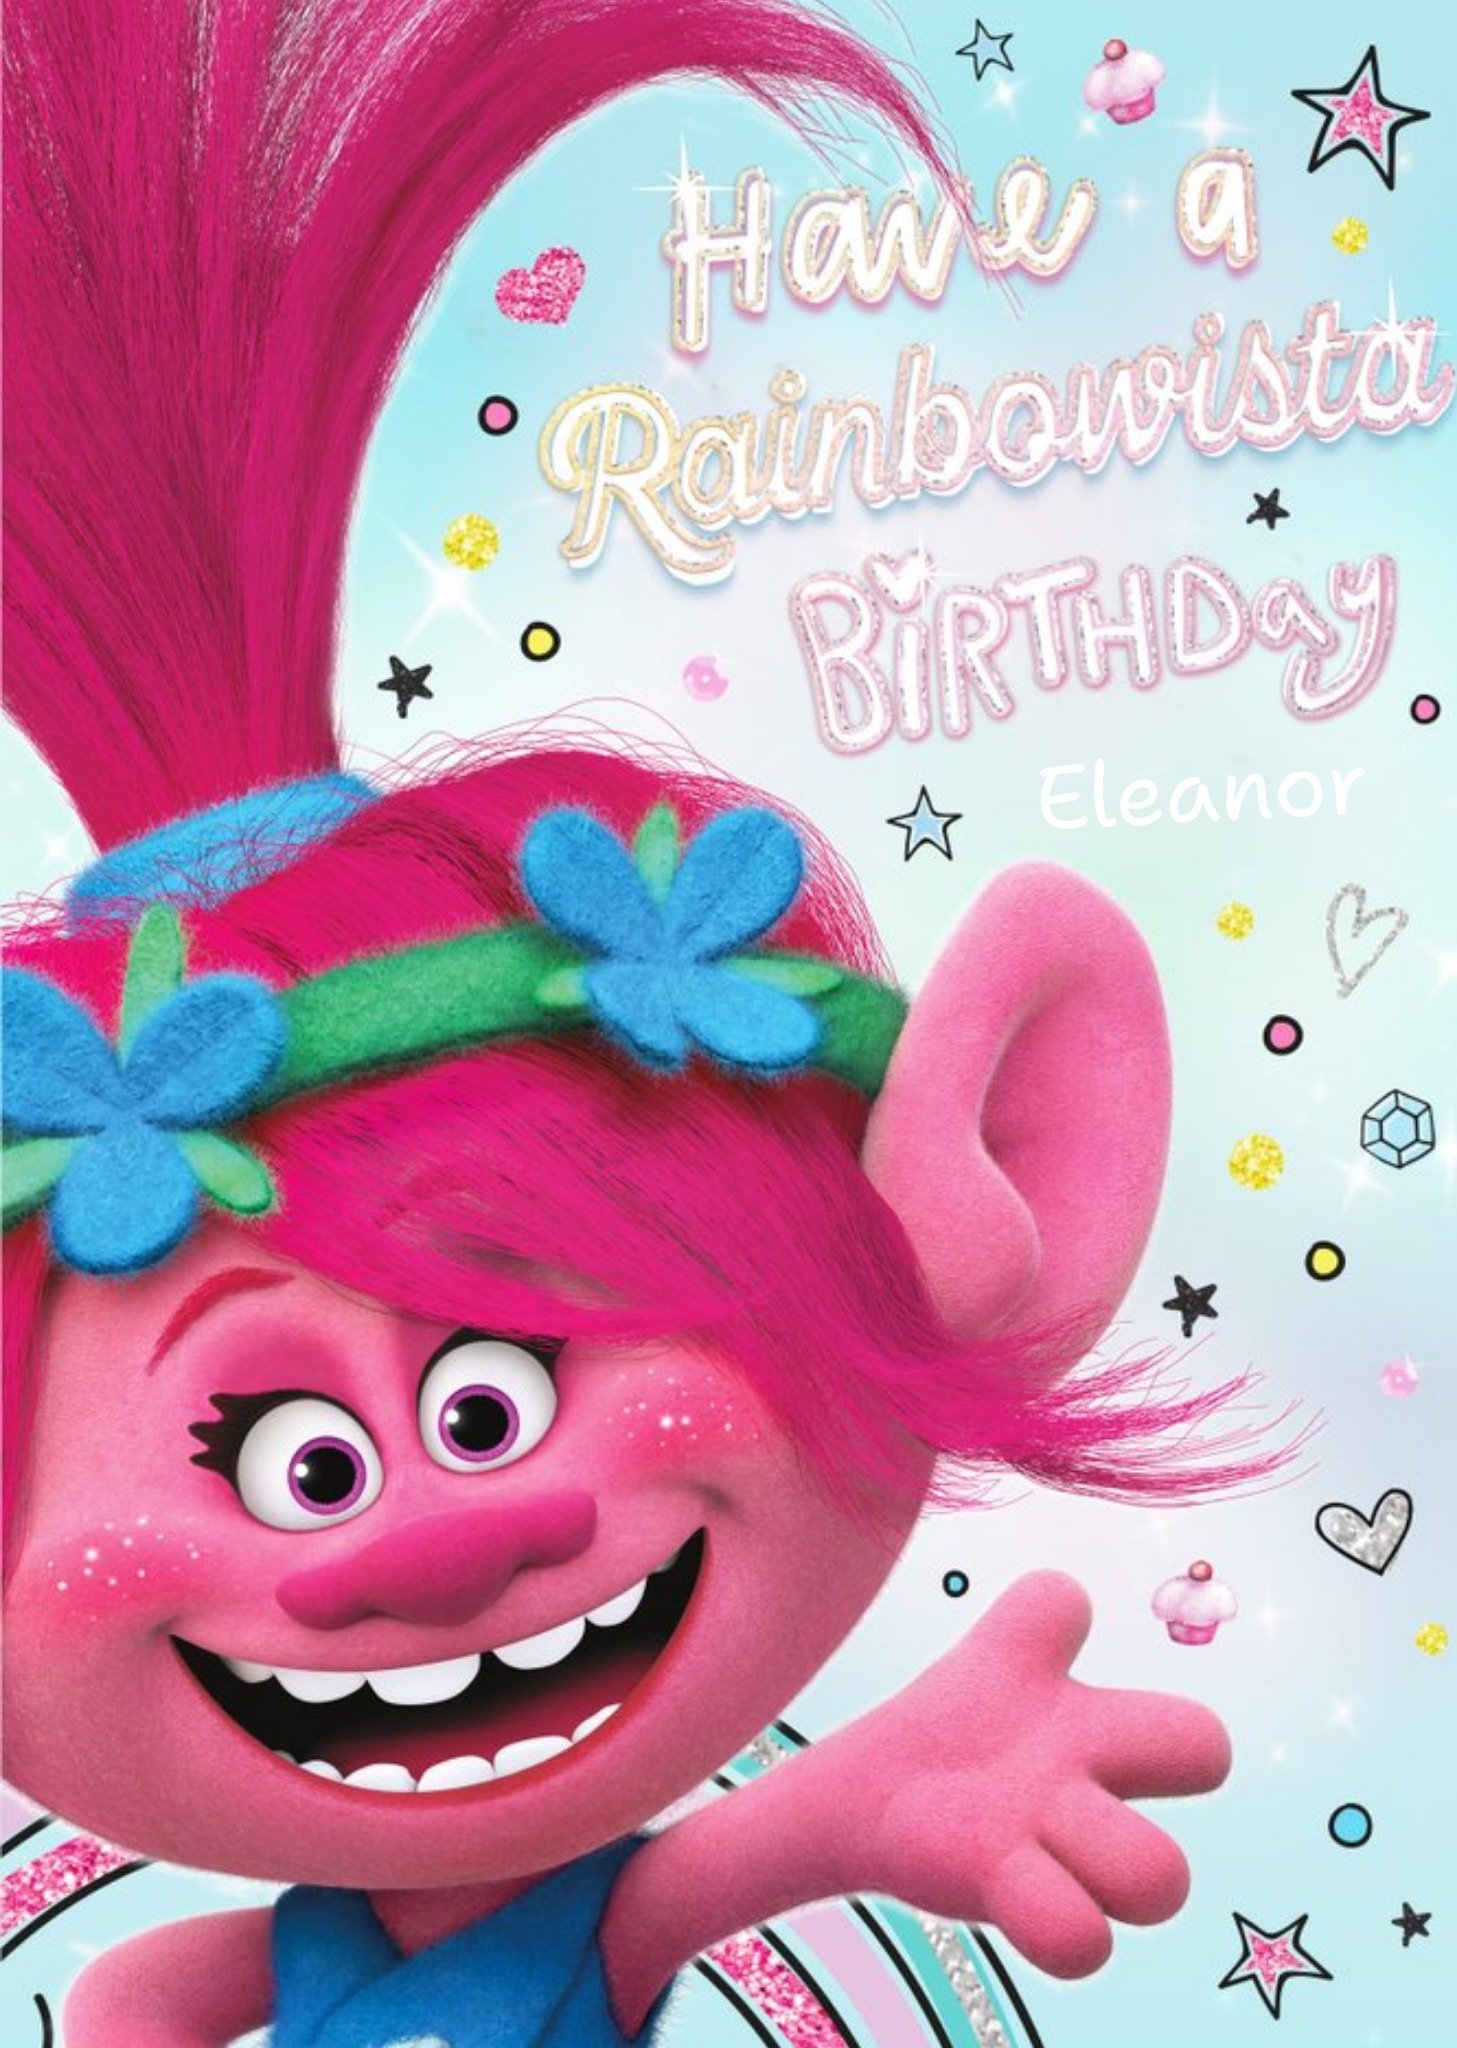 Rainbowista Birthday Card - Trolls Birthday Card, Large